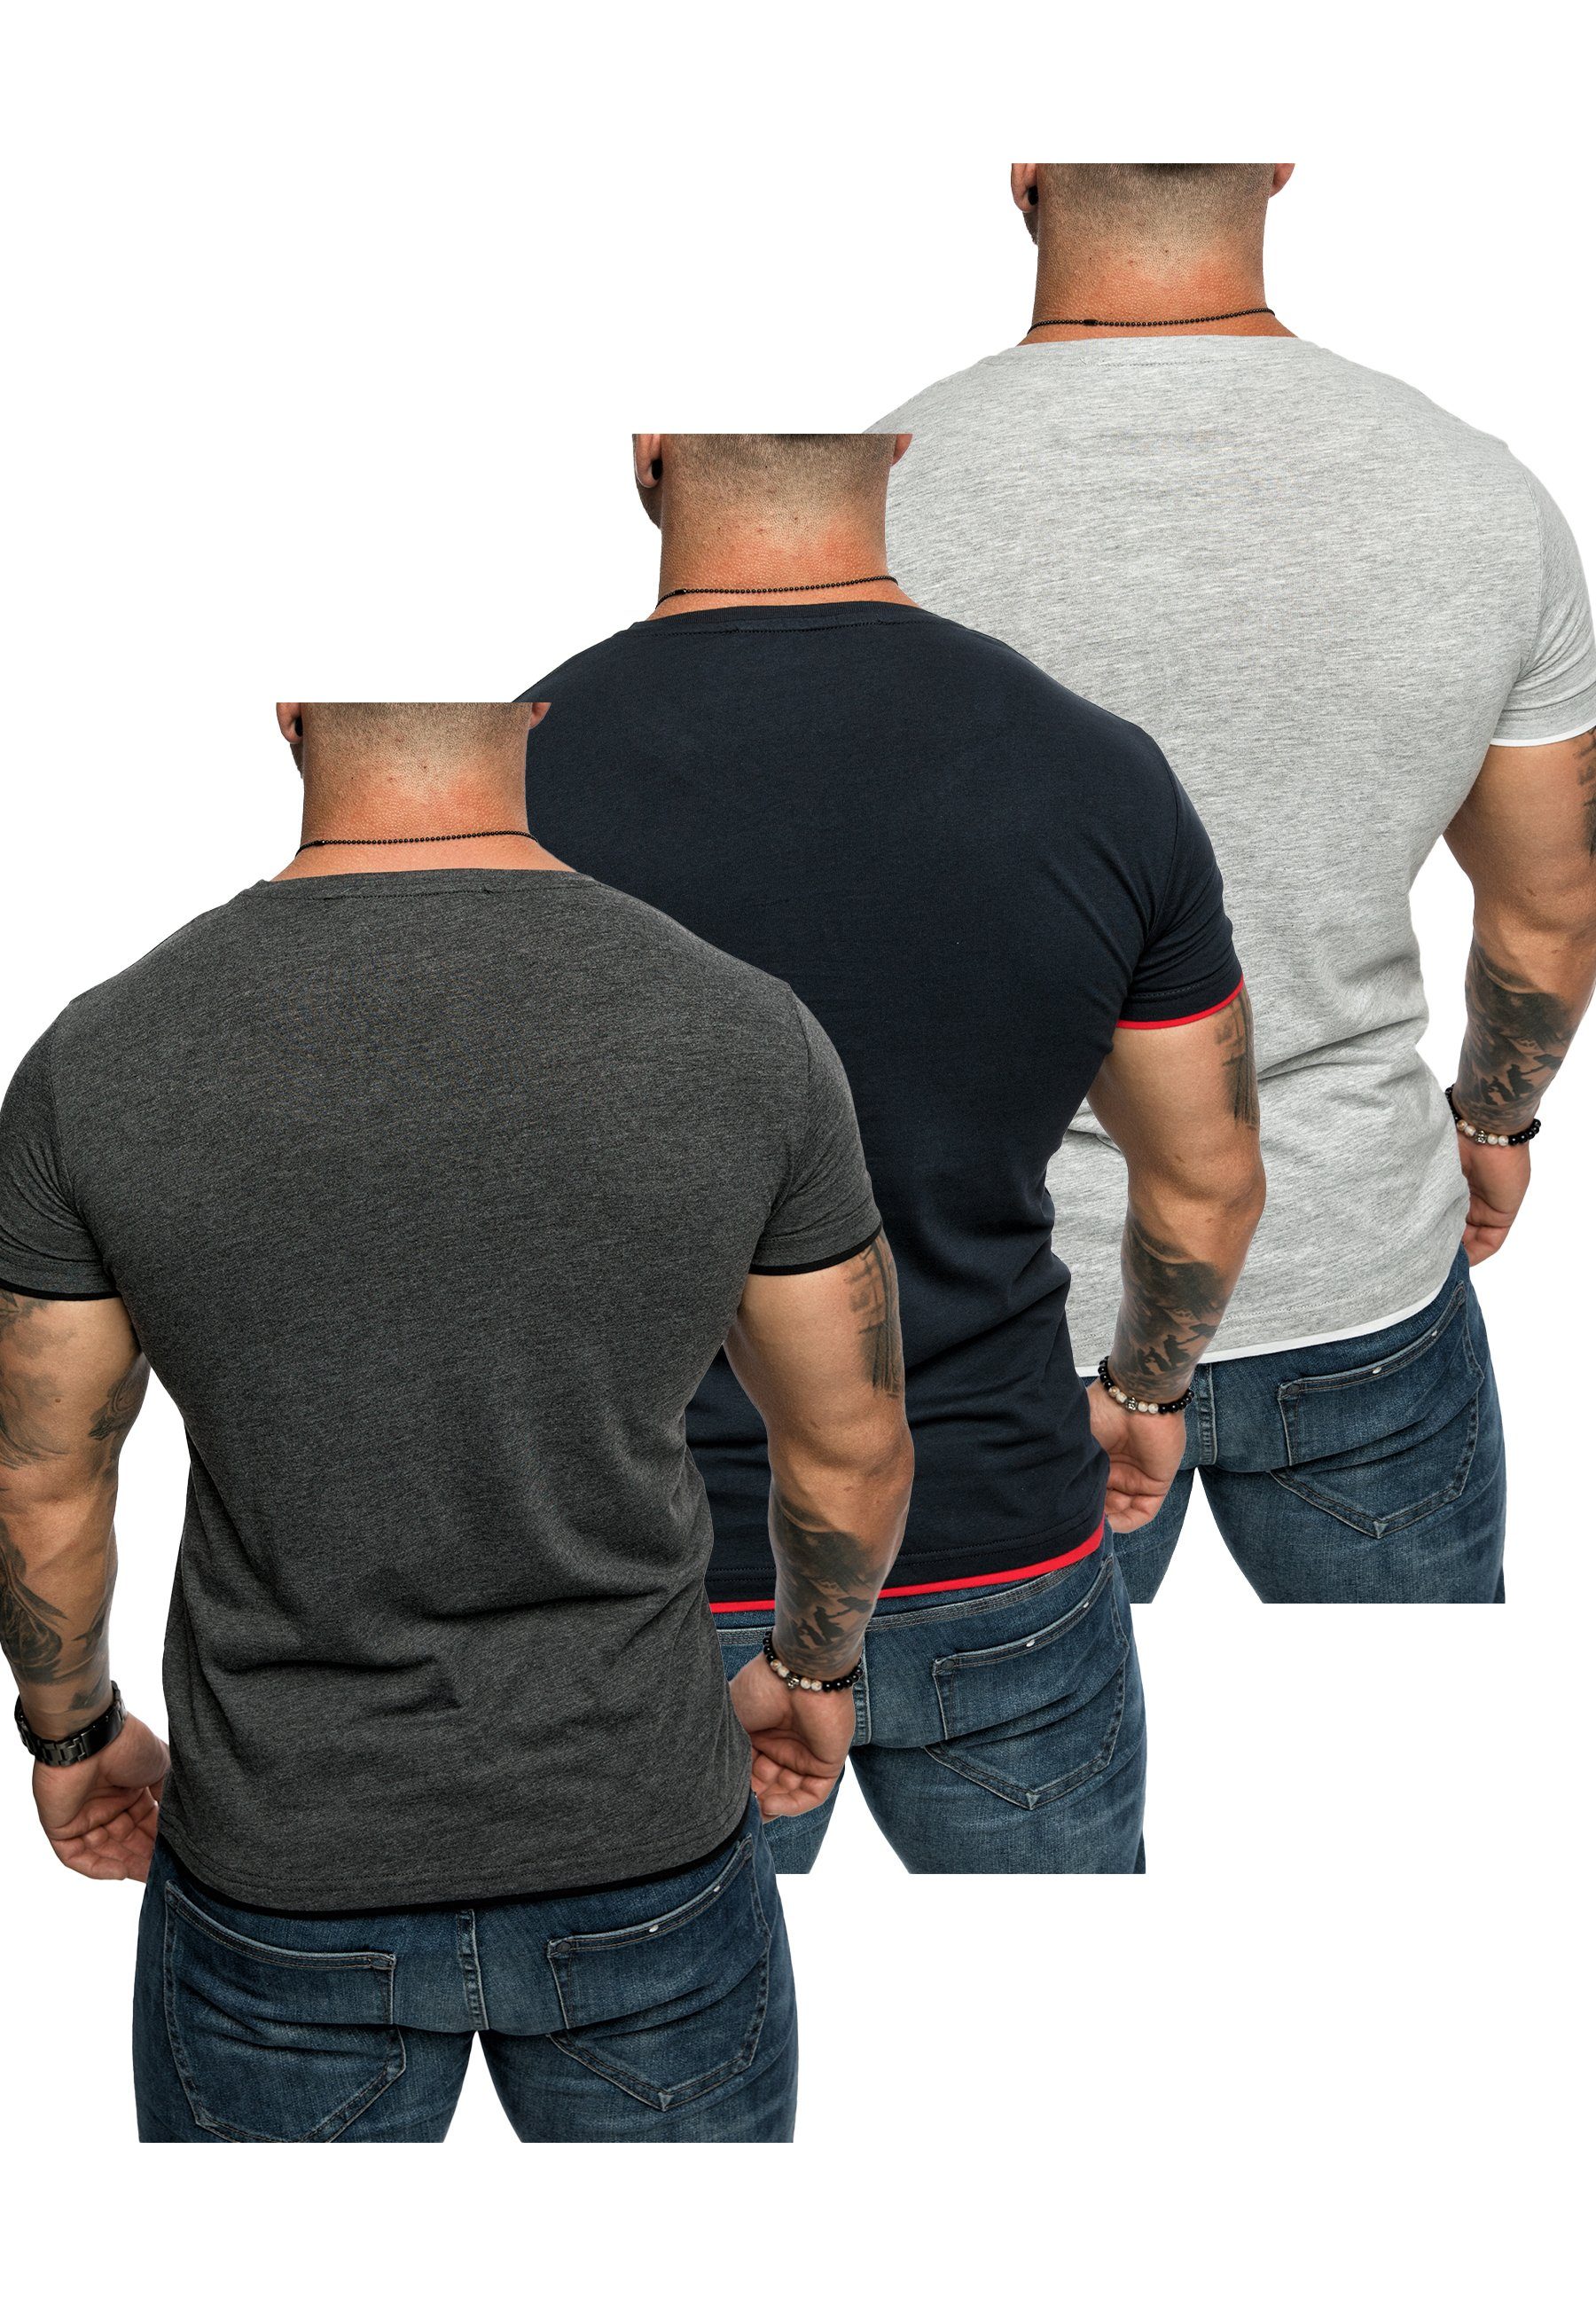 Navyblau/Rot 3. Grau/Weiß) Amaci&Sons Rundhalsausschnitt T-Shirts Herren Oversize LAKEWOOD T-Shirt + Basic (3er-Pack) mit (Anthrazit/Schwarz T-Shirt 3er-Pack +